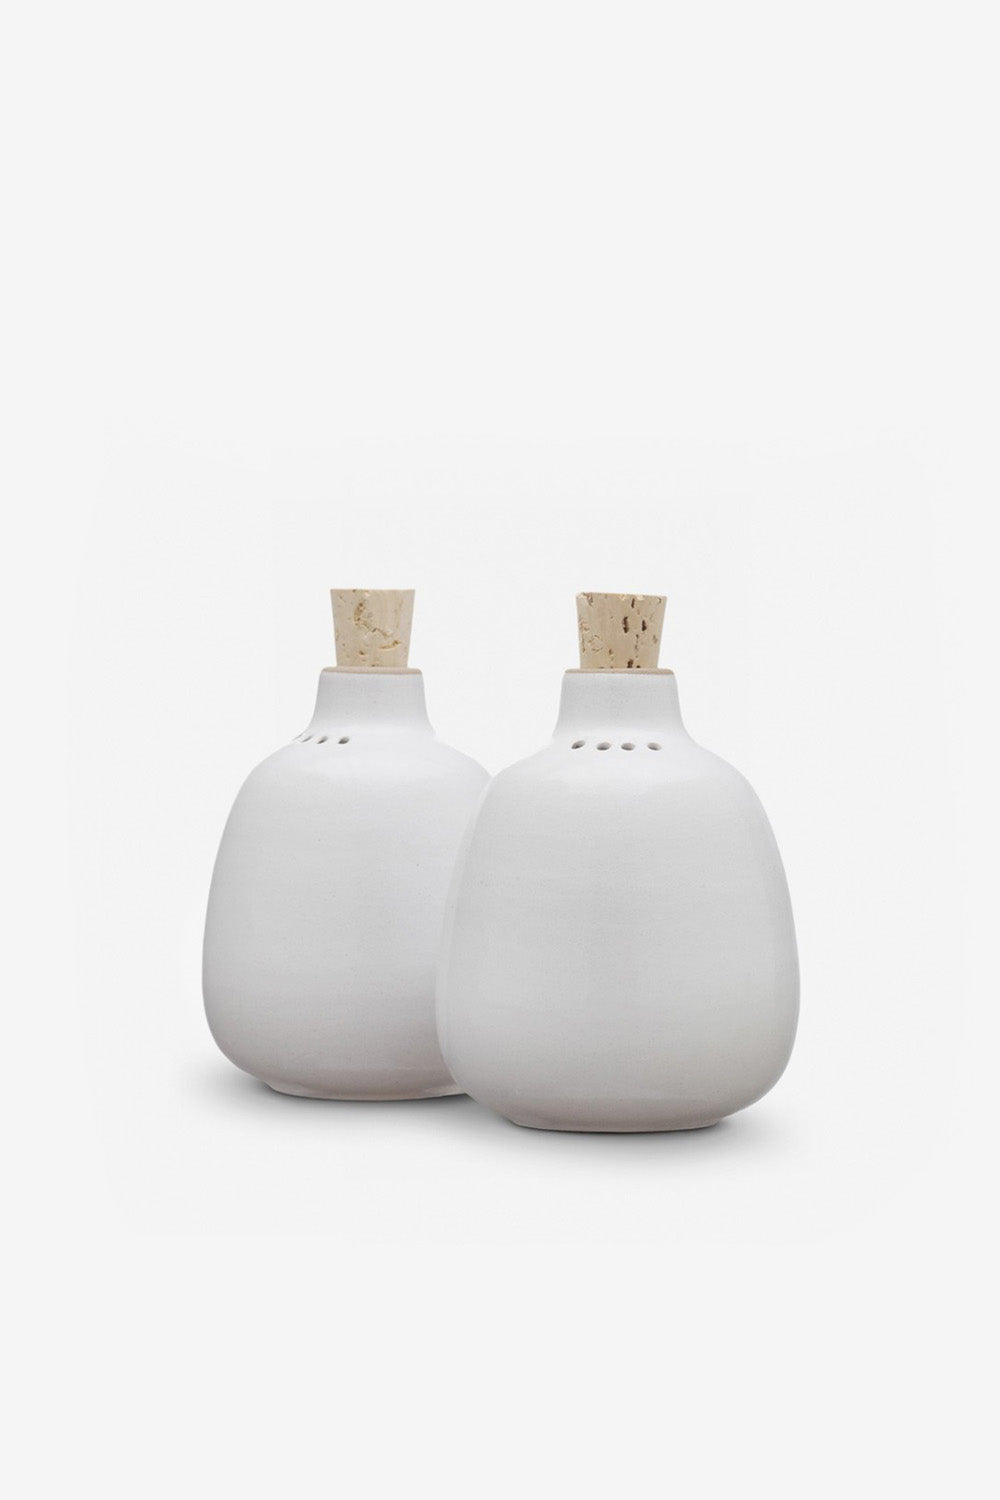 Alabama Chanin Heath Ceramics Salt and Pepper Shaker Set in Opaque White